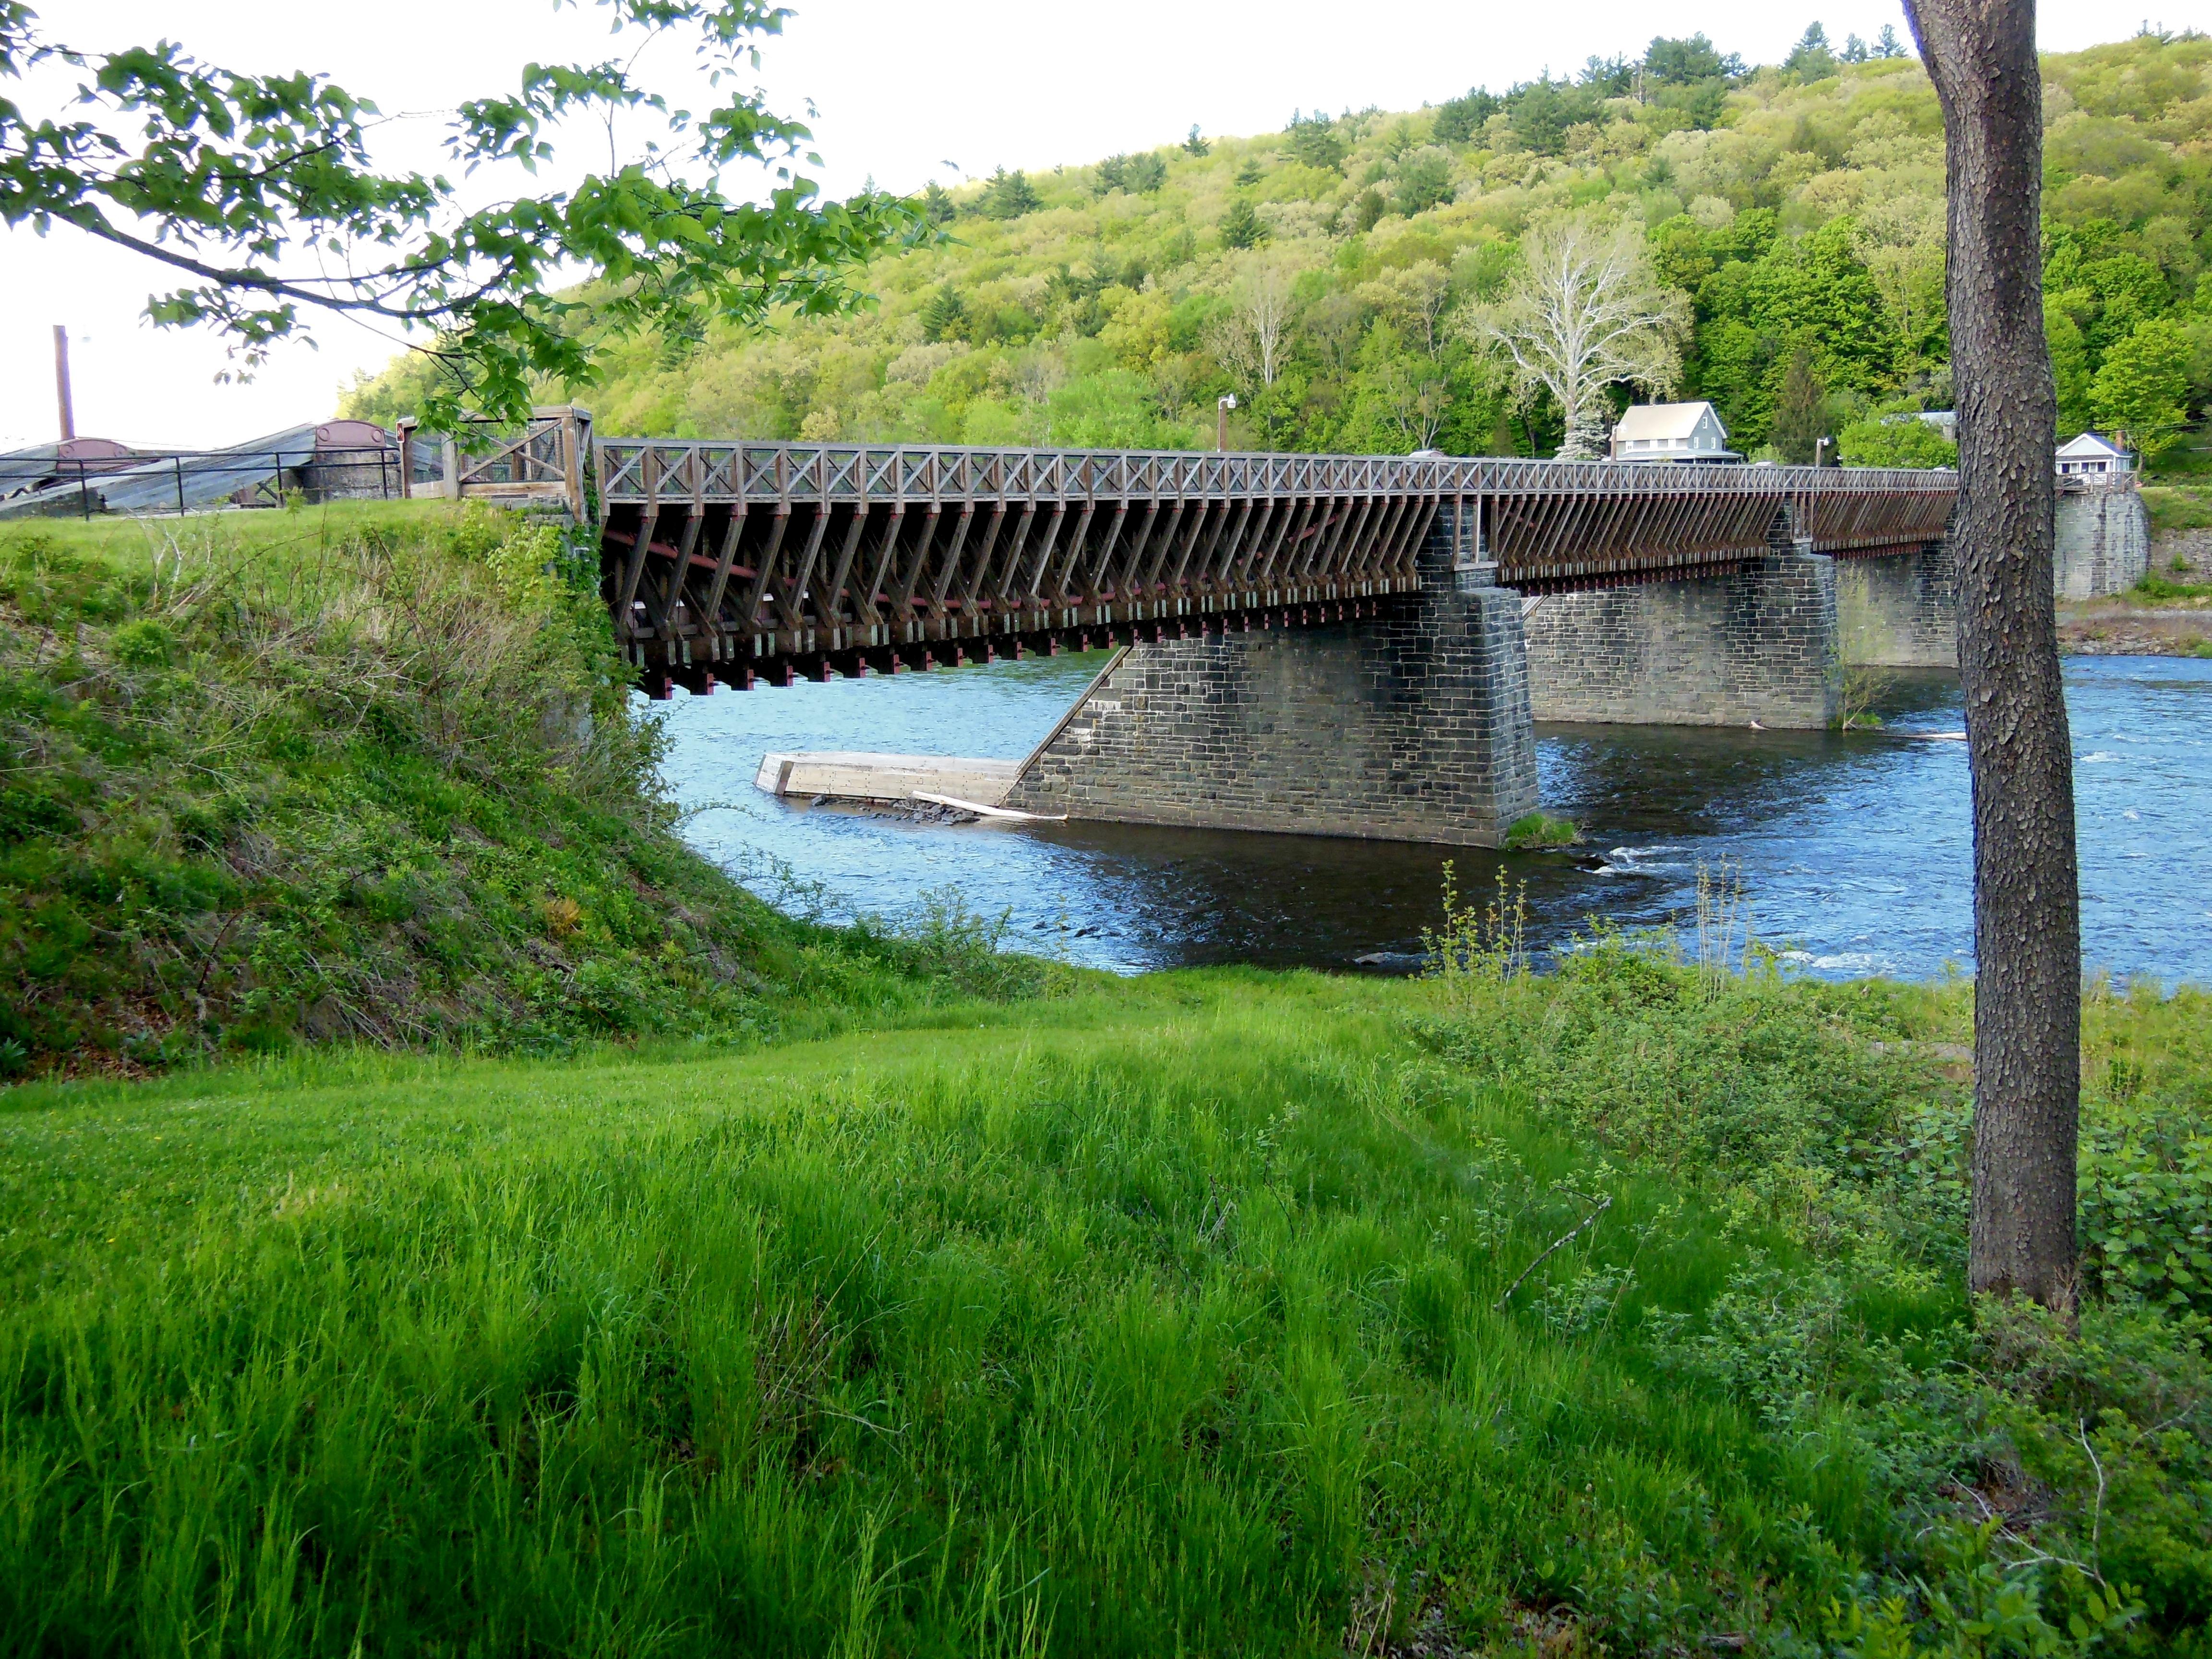 Roebling's Delaware Aqueduct at Upper Delaware Scenic and Recreational River